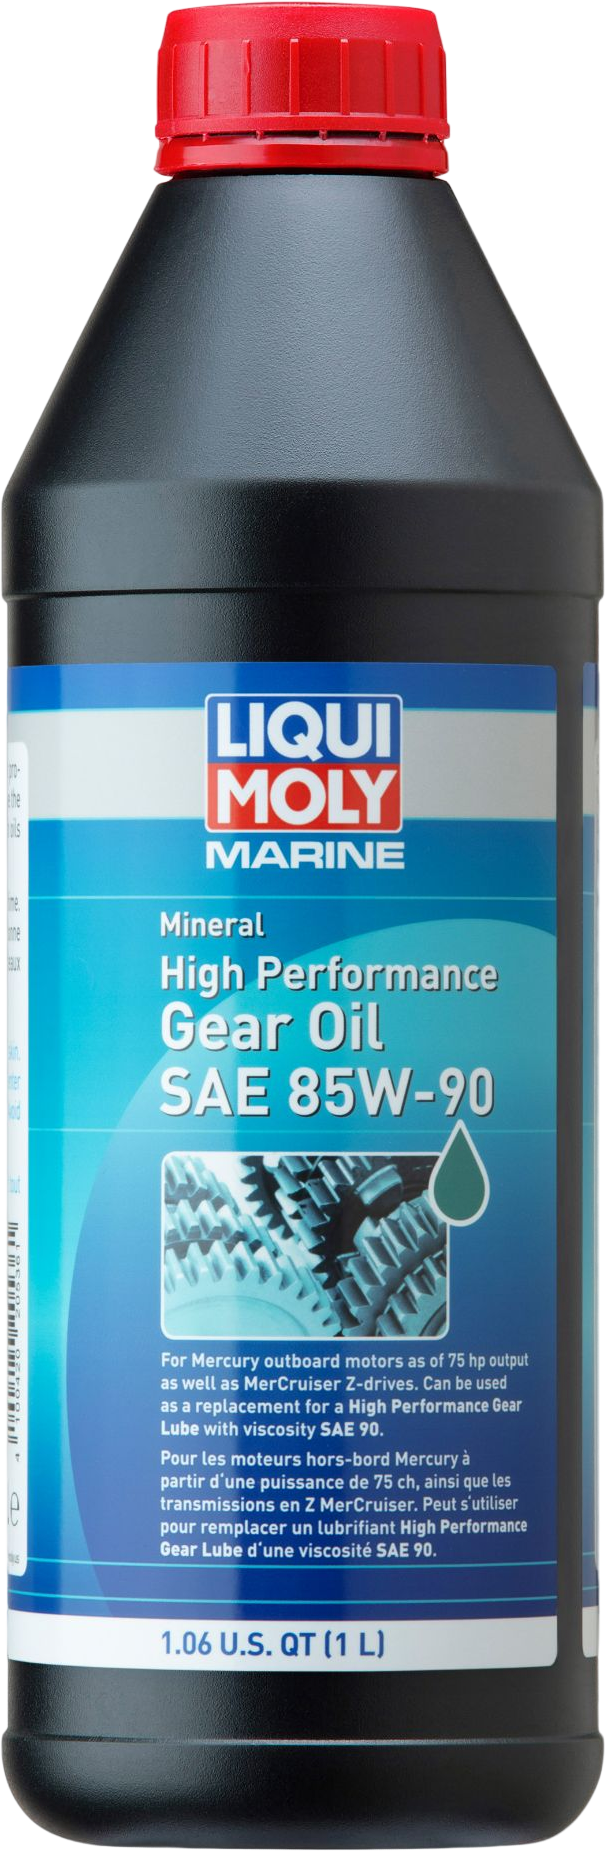 Liqui Moly Marine High Performance Gear Oil 85W-90, 6 x 1 lt detail 2